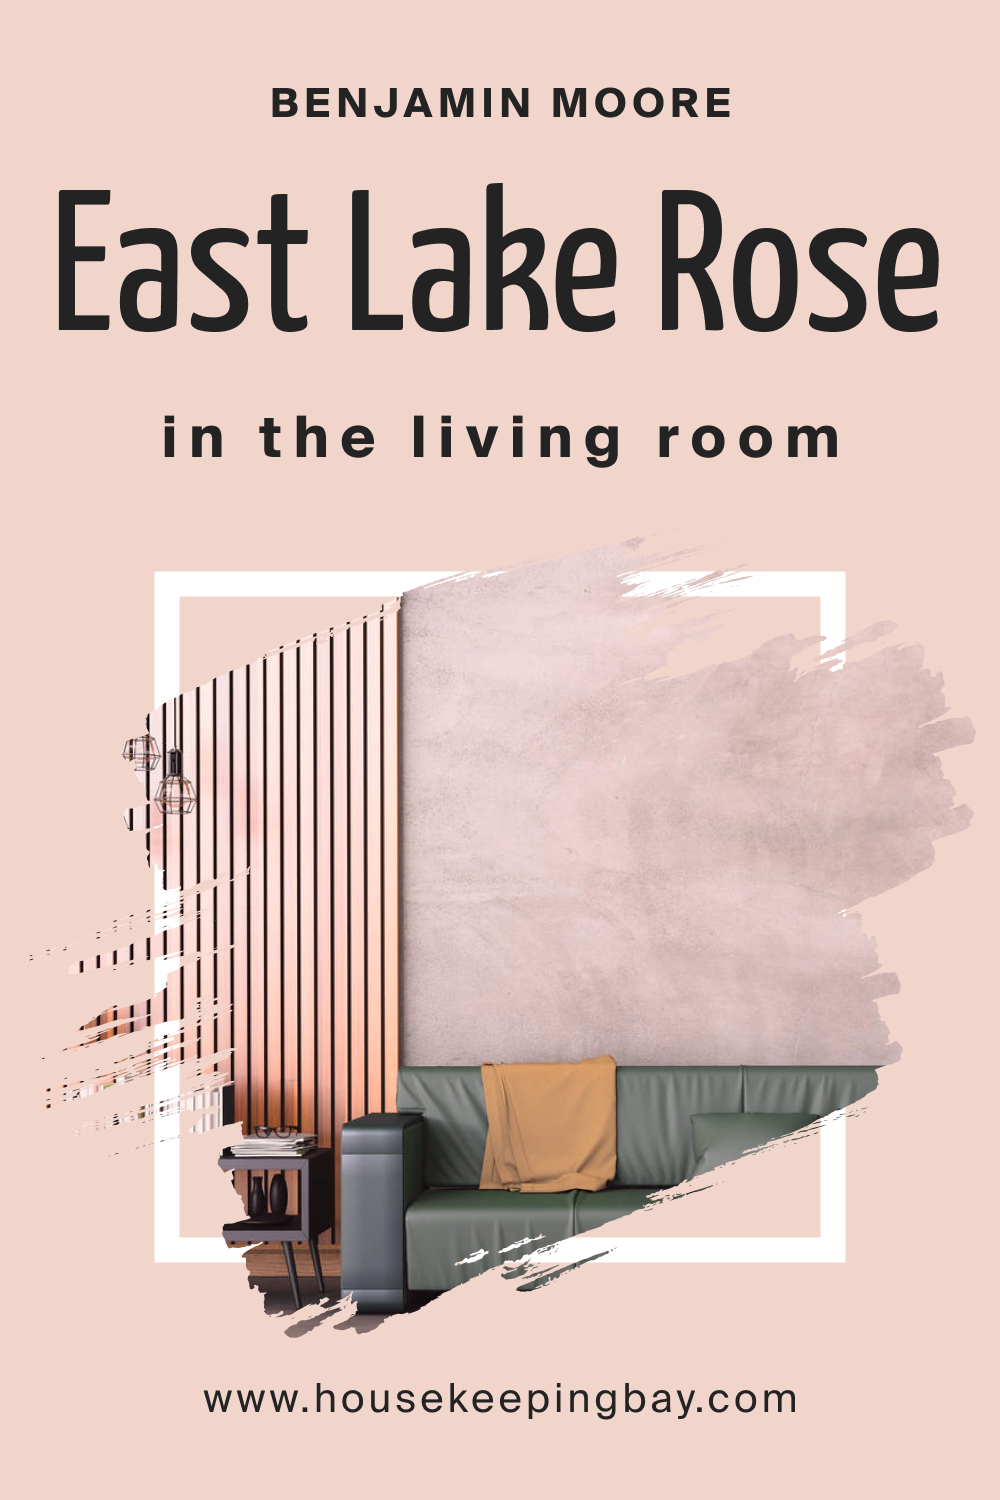 Benjamin Moore. BM East Lake Rose 043 for the Living Room